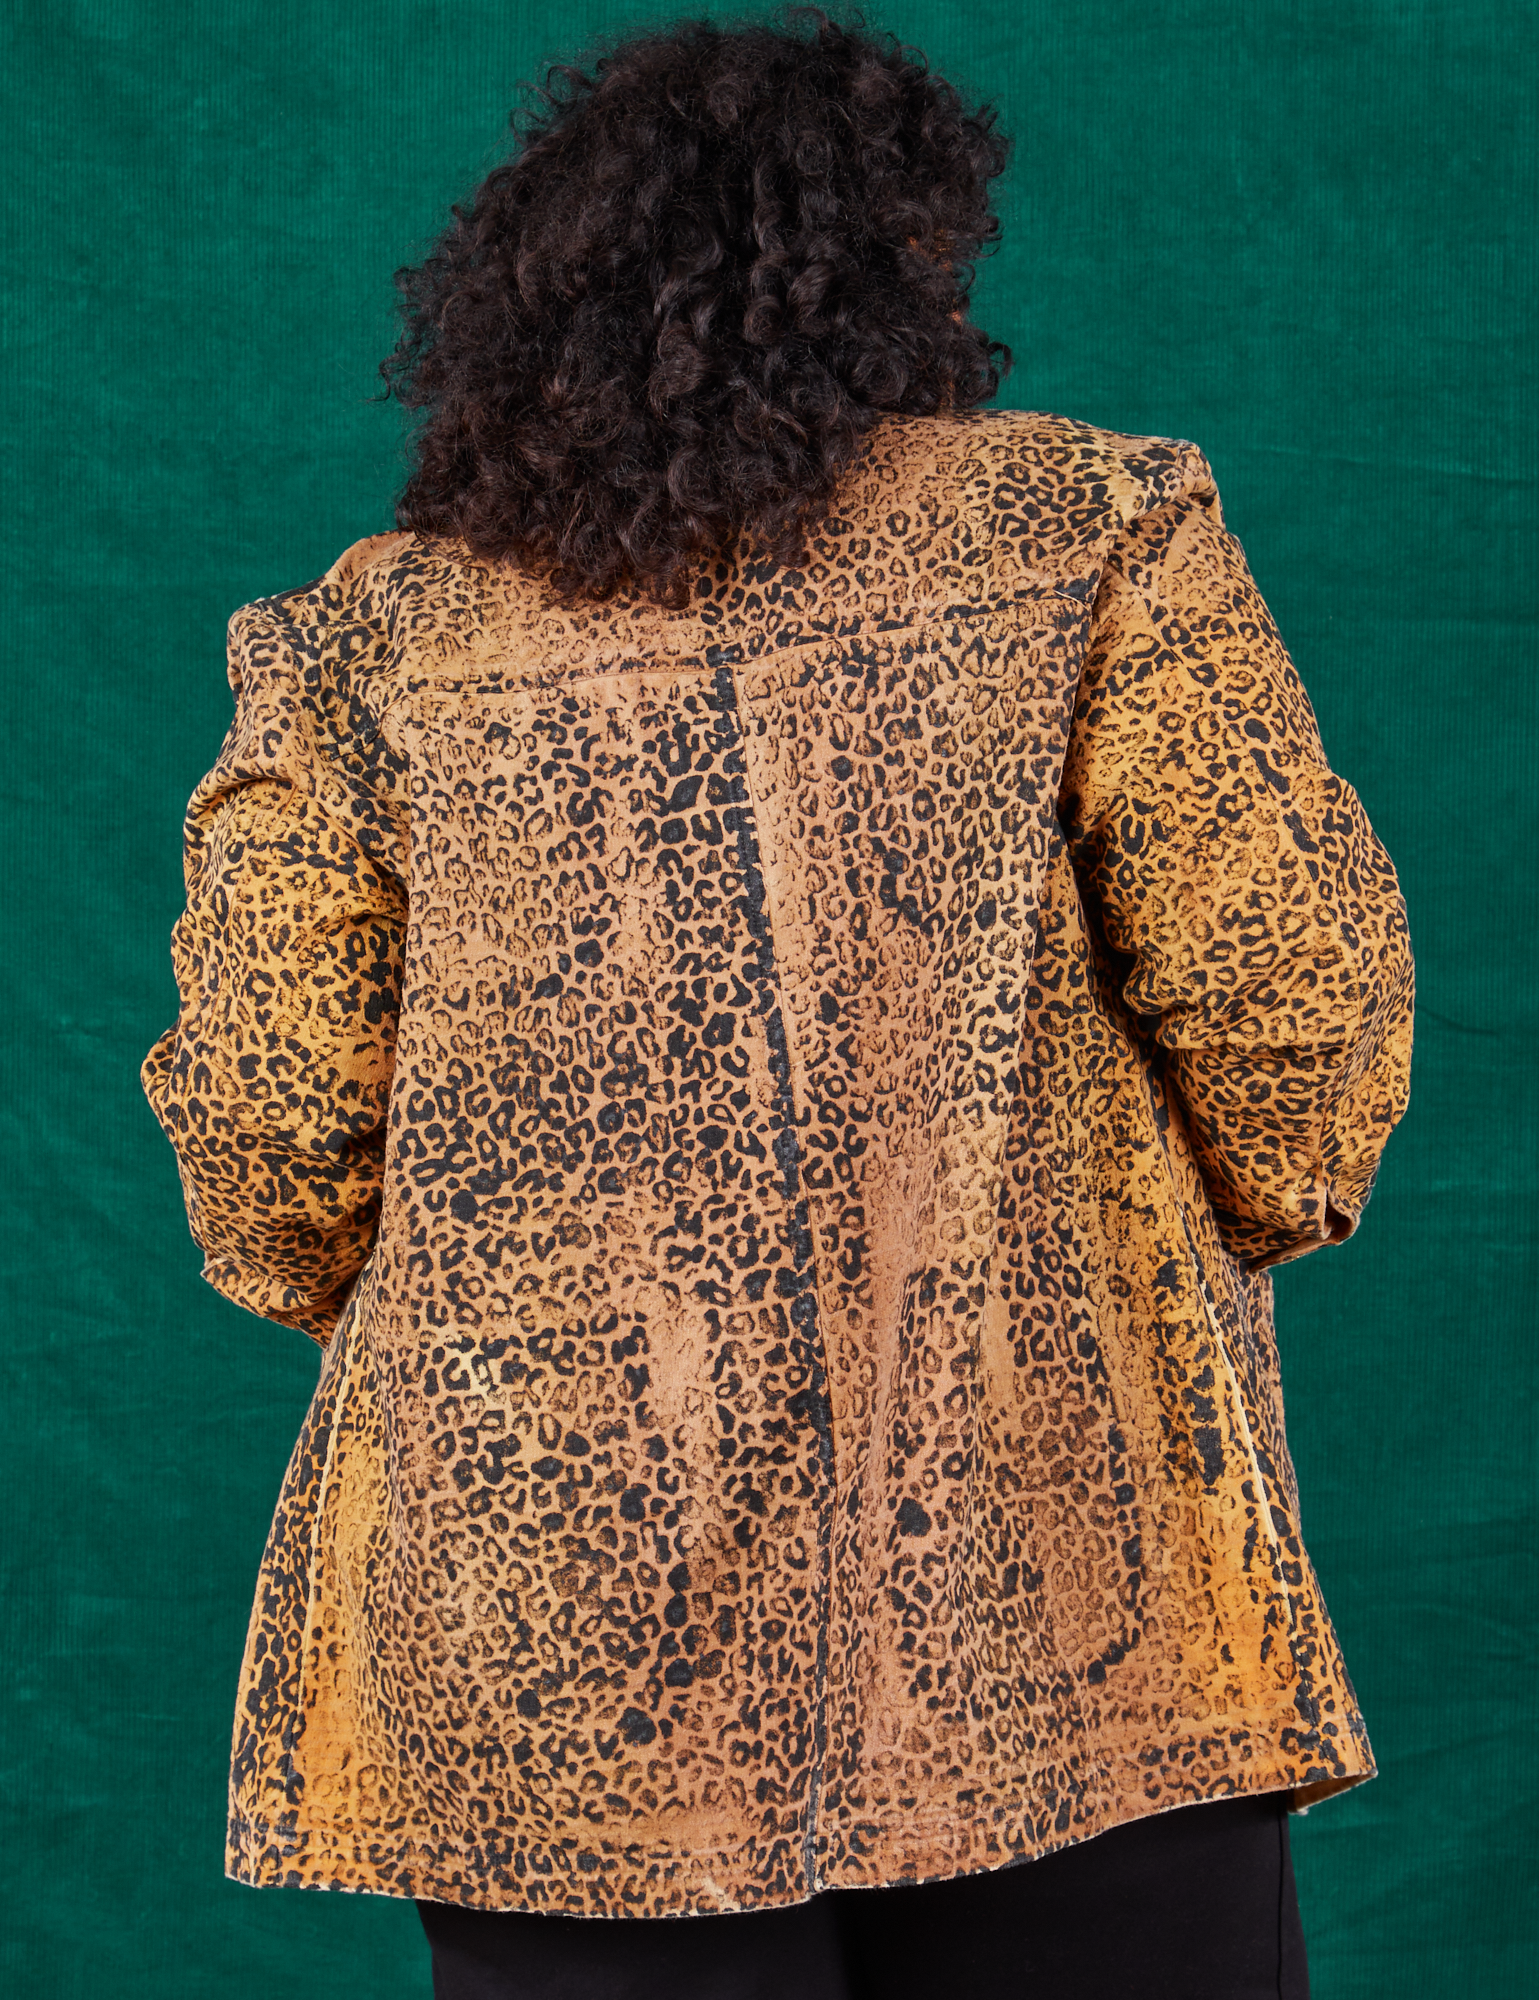 Field Coat in Leopard Print back view on Morgan